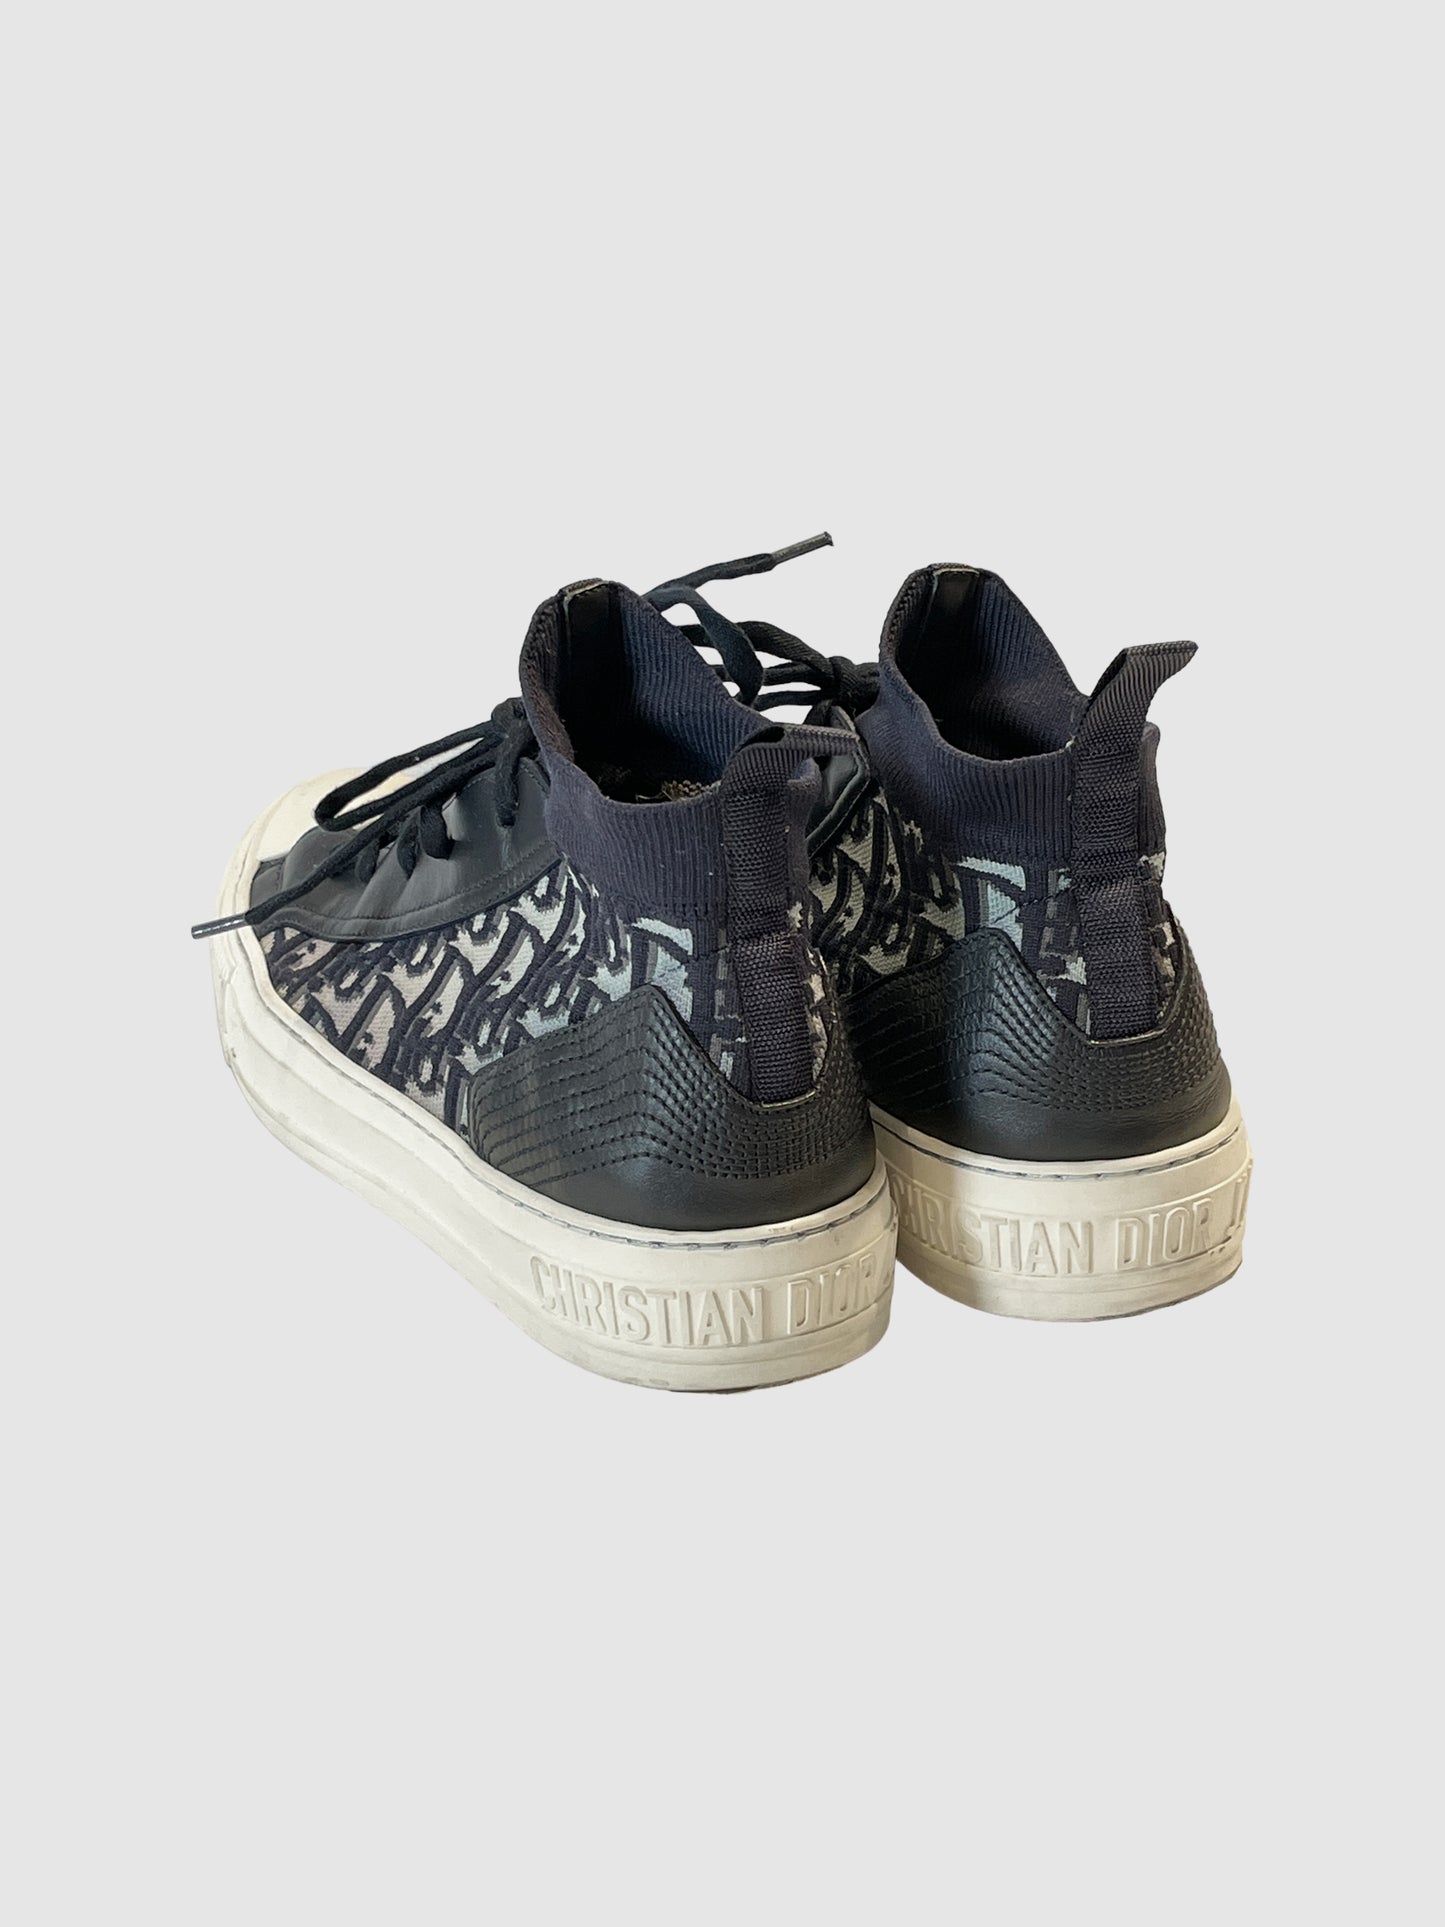 Walk'n'Dior Sneakers - Size 38